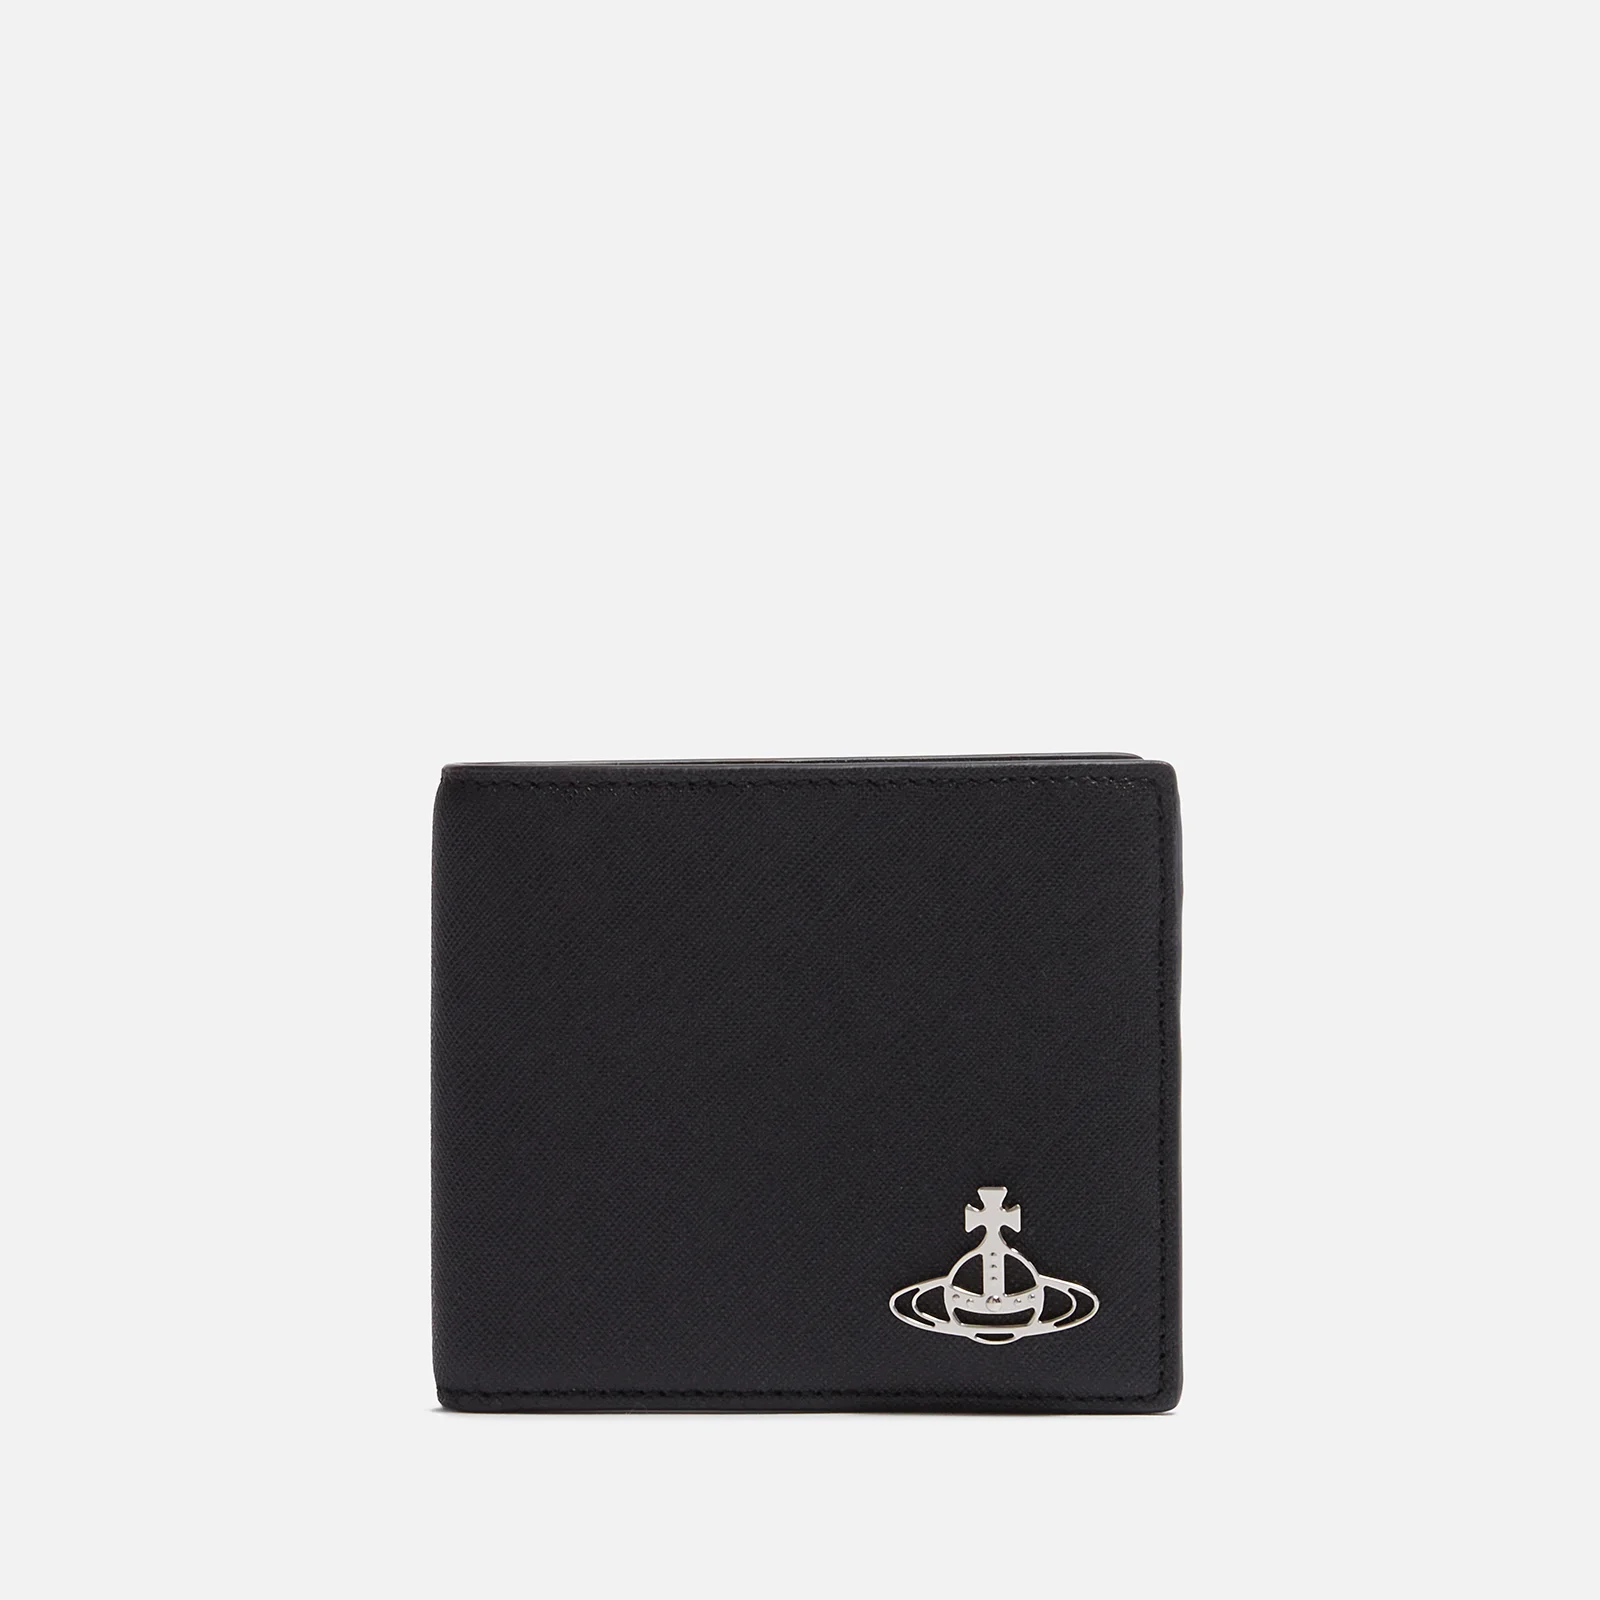 Vivienne Westwood Saffiano Leather Bifold Wallet Image 1